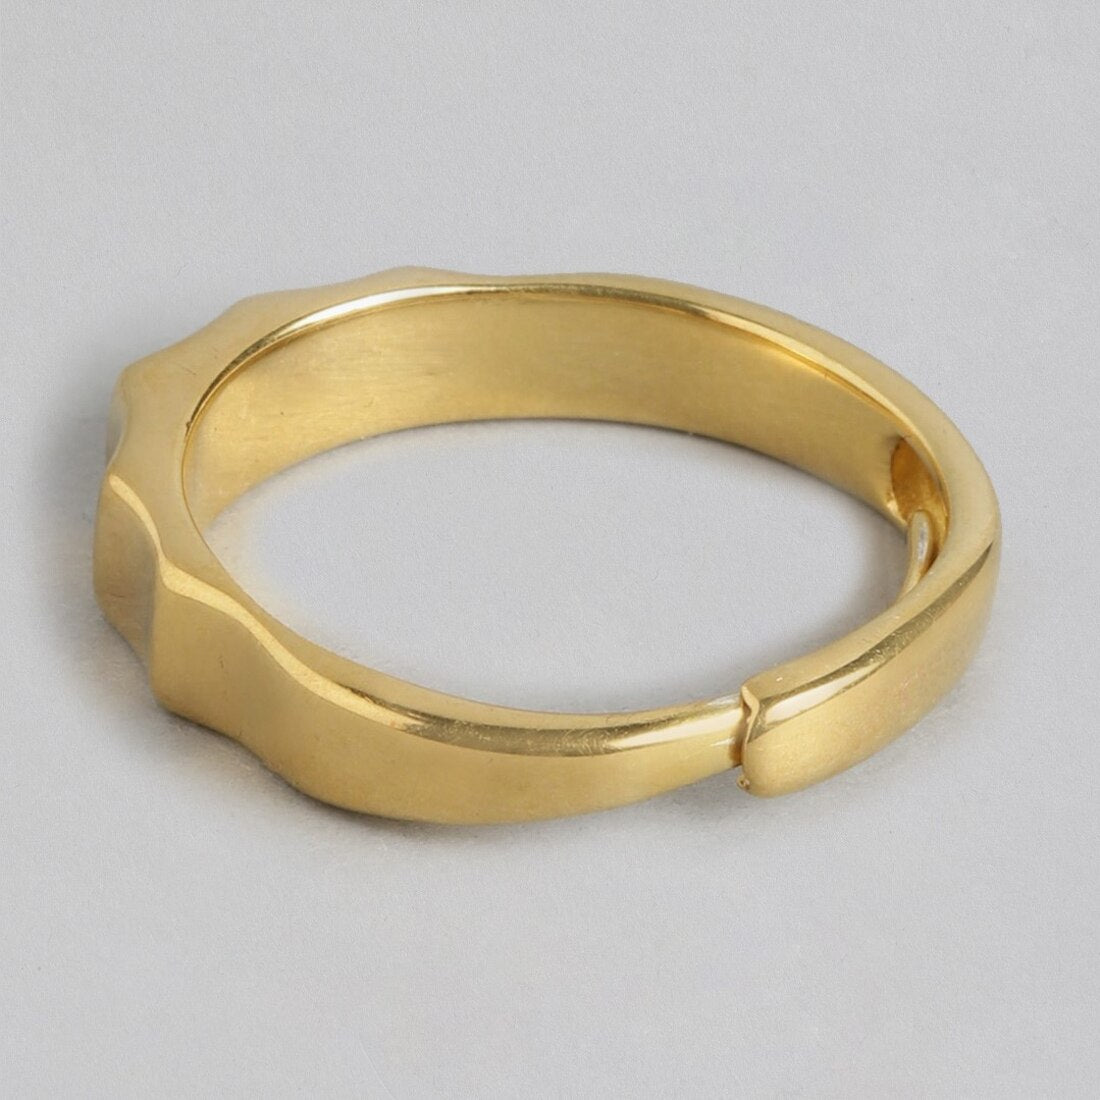 Golden Majesty Gold-Plated 925 Sterling Silver Ring for Him (Adjustable)